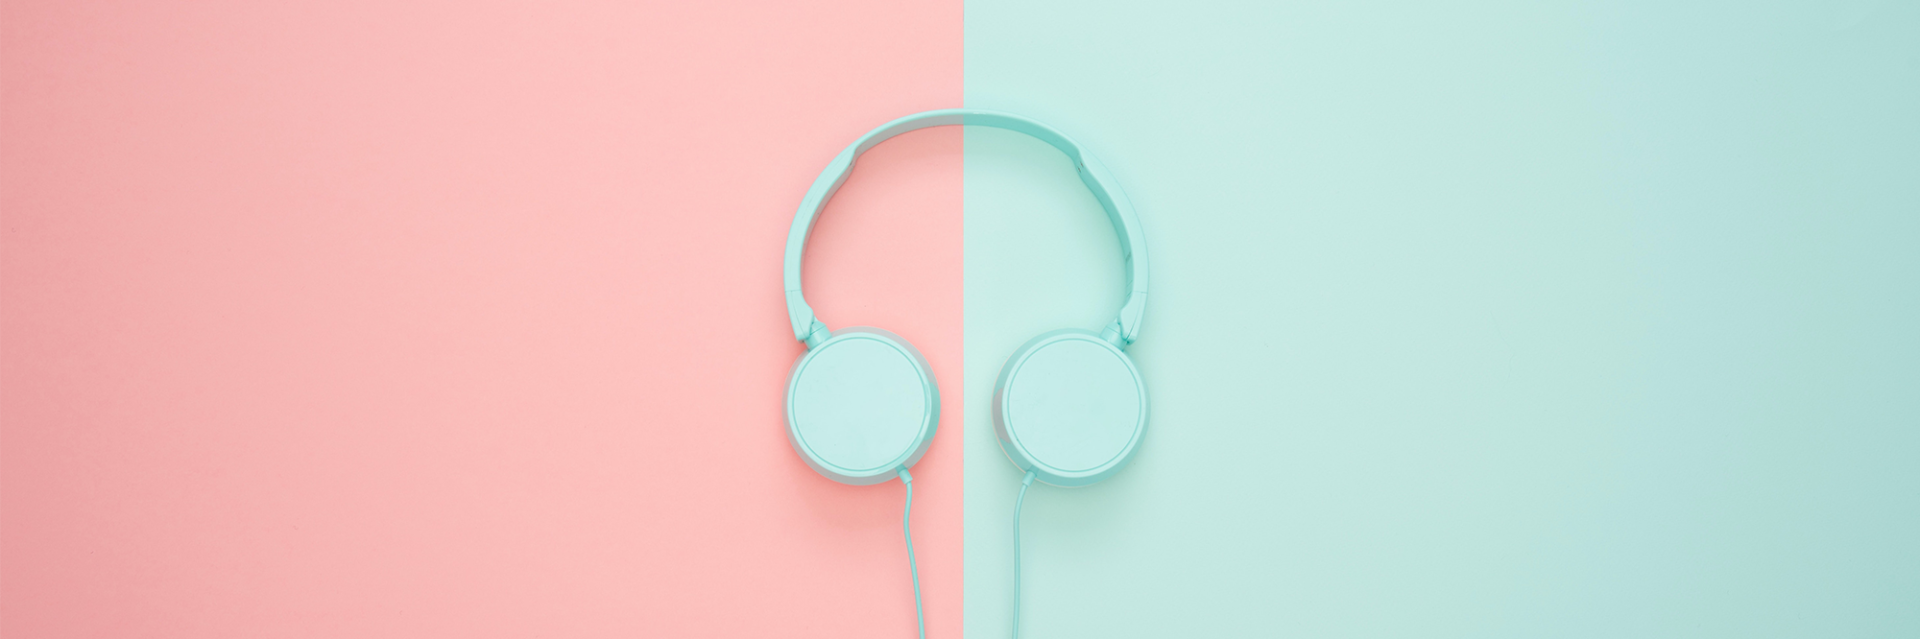 Kopfhörer als Symbol für Podcast hören